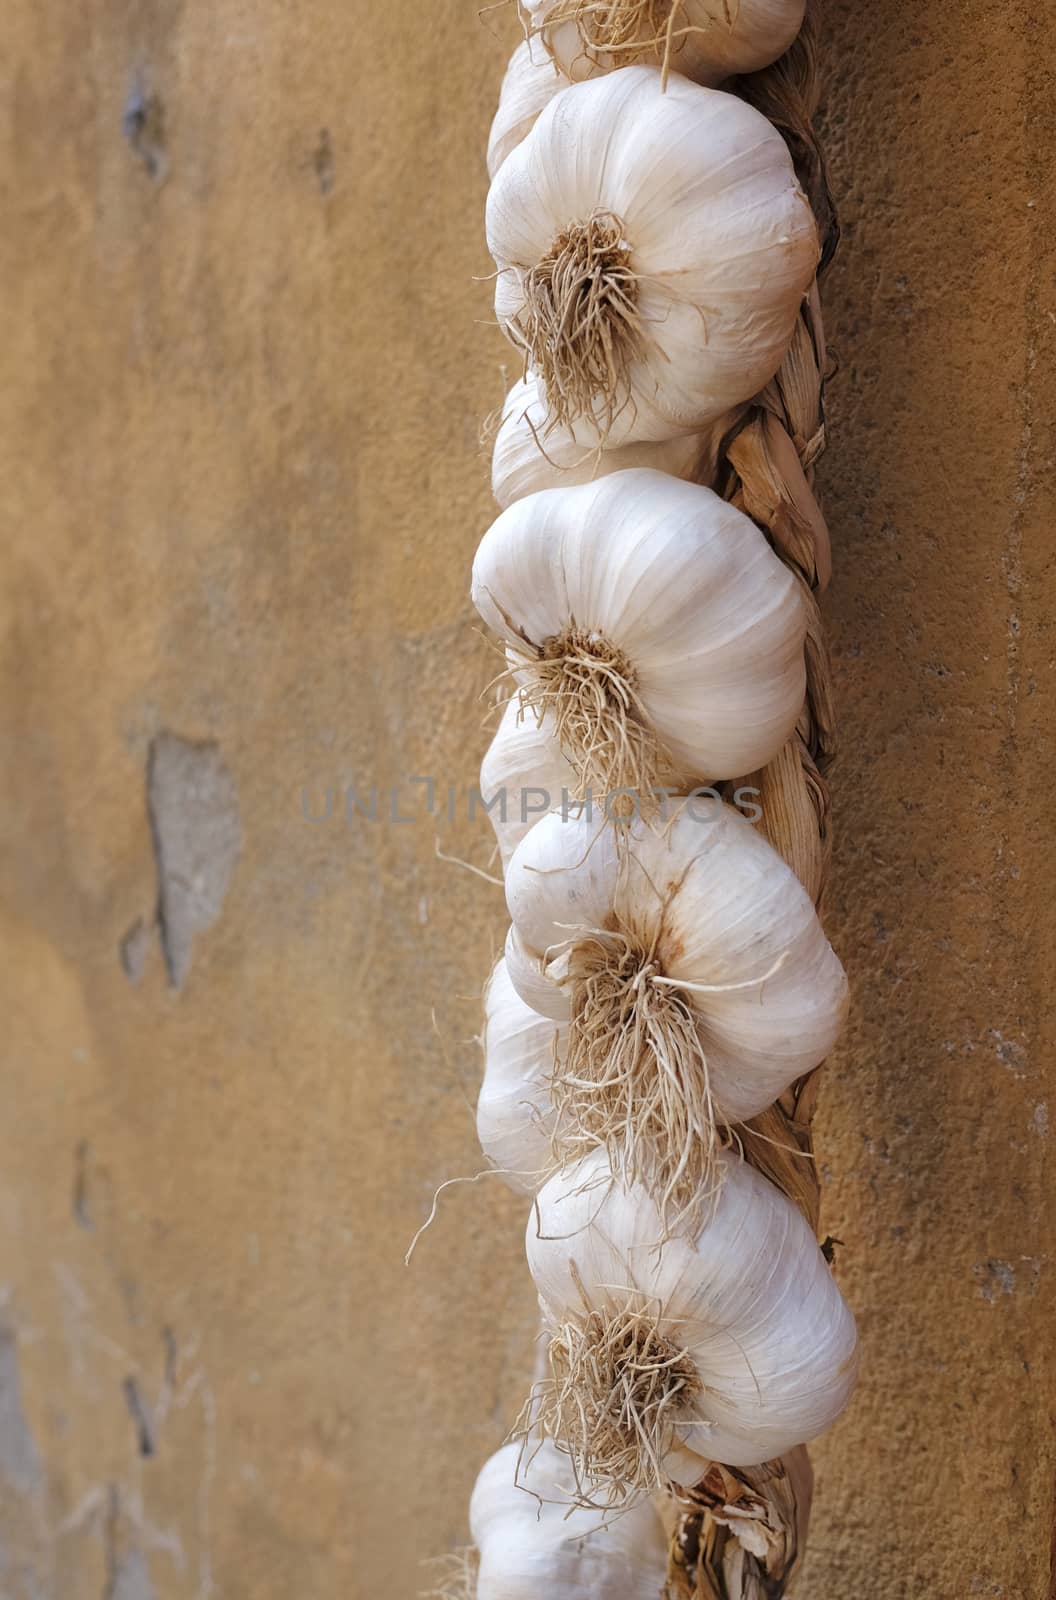 String of garlic bulbs by Digifoodstock